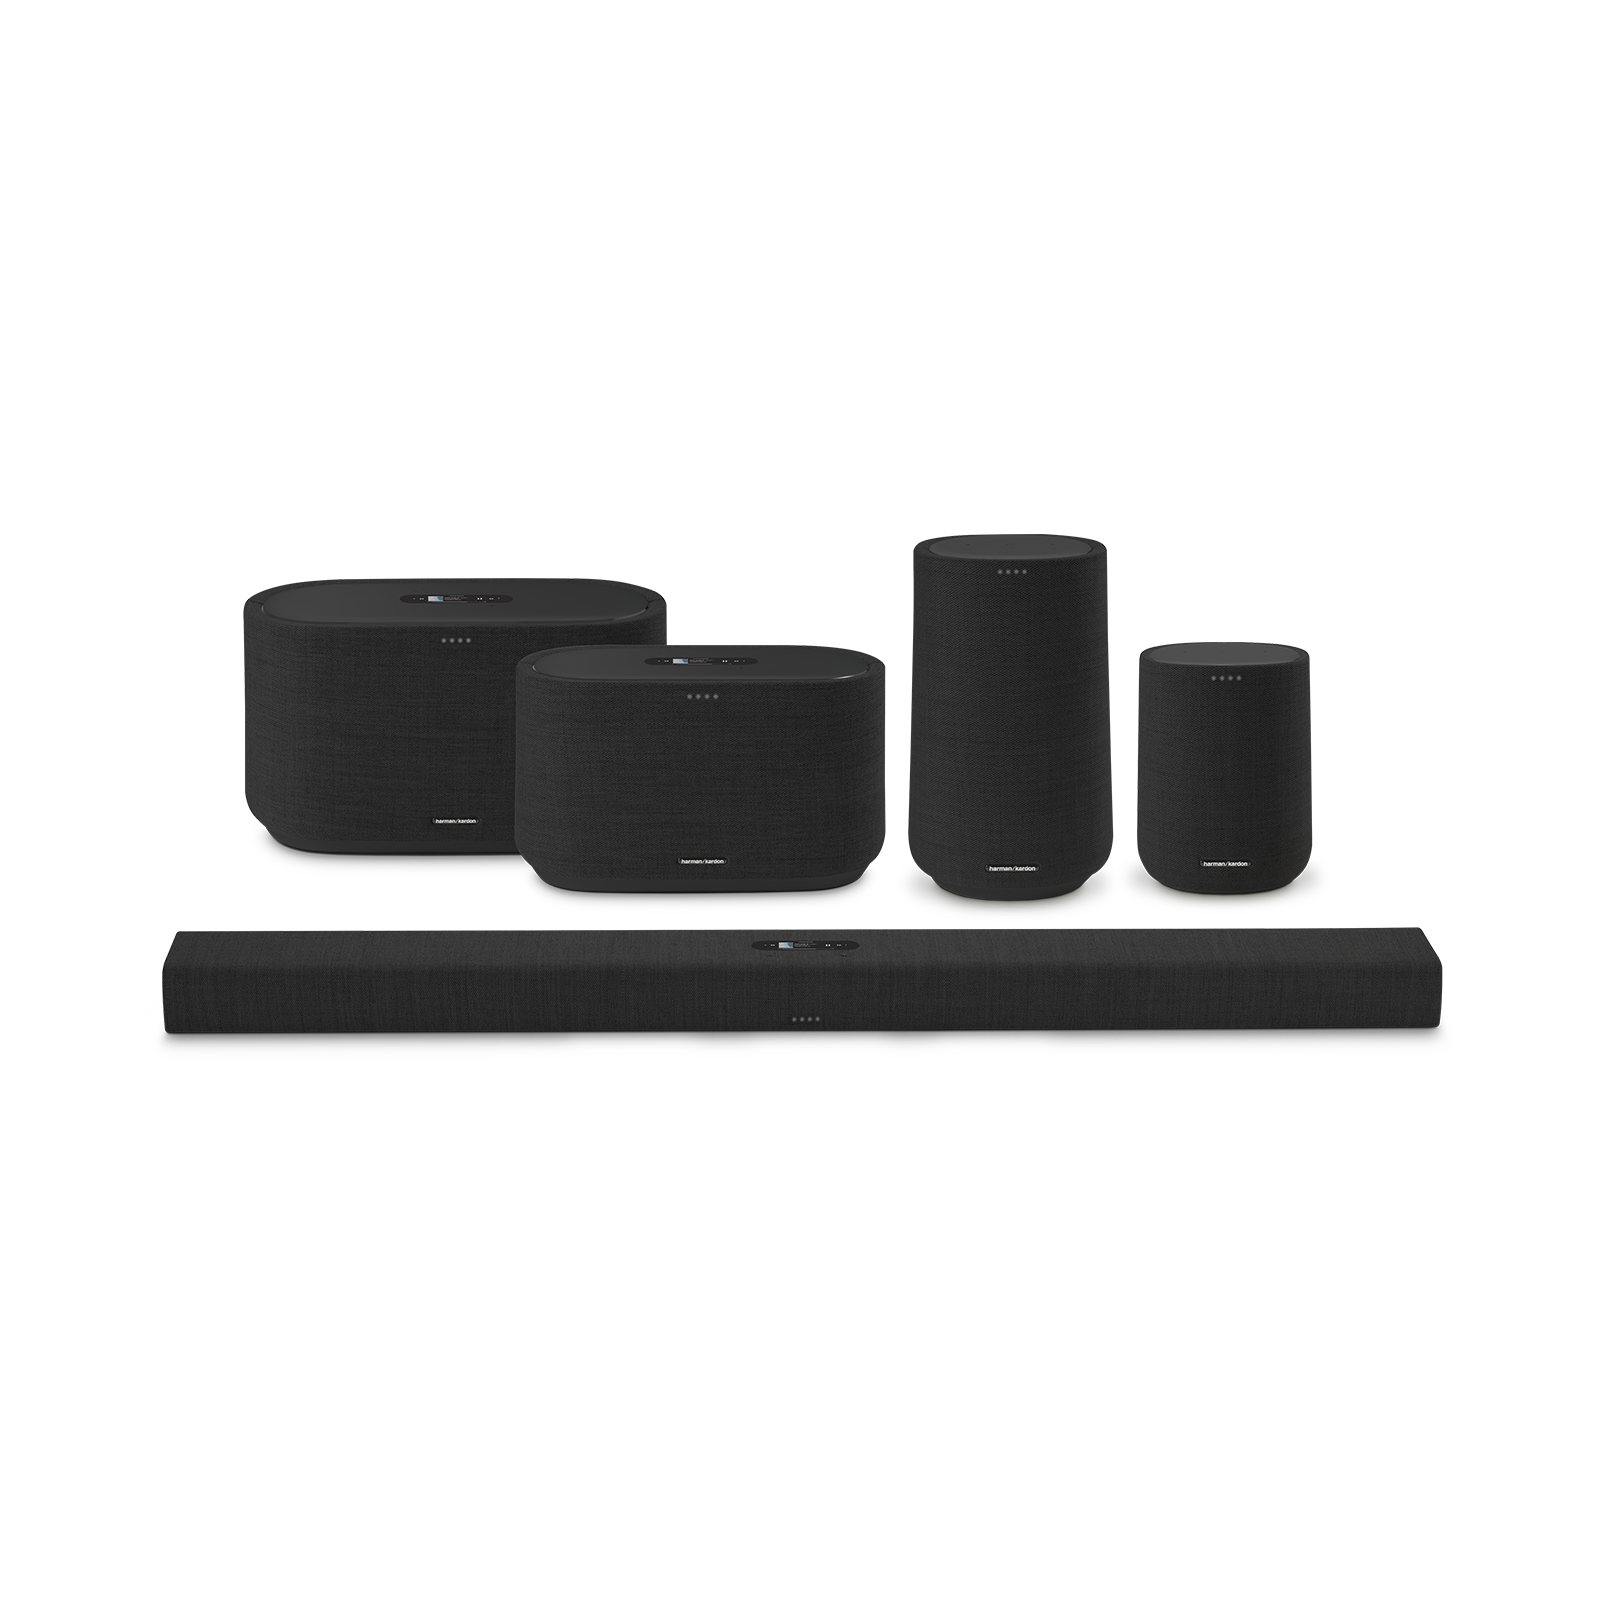 Harman Kardon Citation 300 - Black - The medium-size smart home speaker with award winning design - Detailshot 5